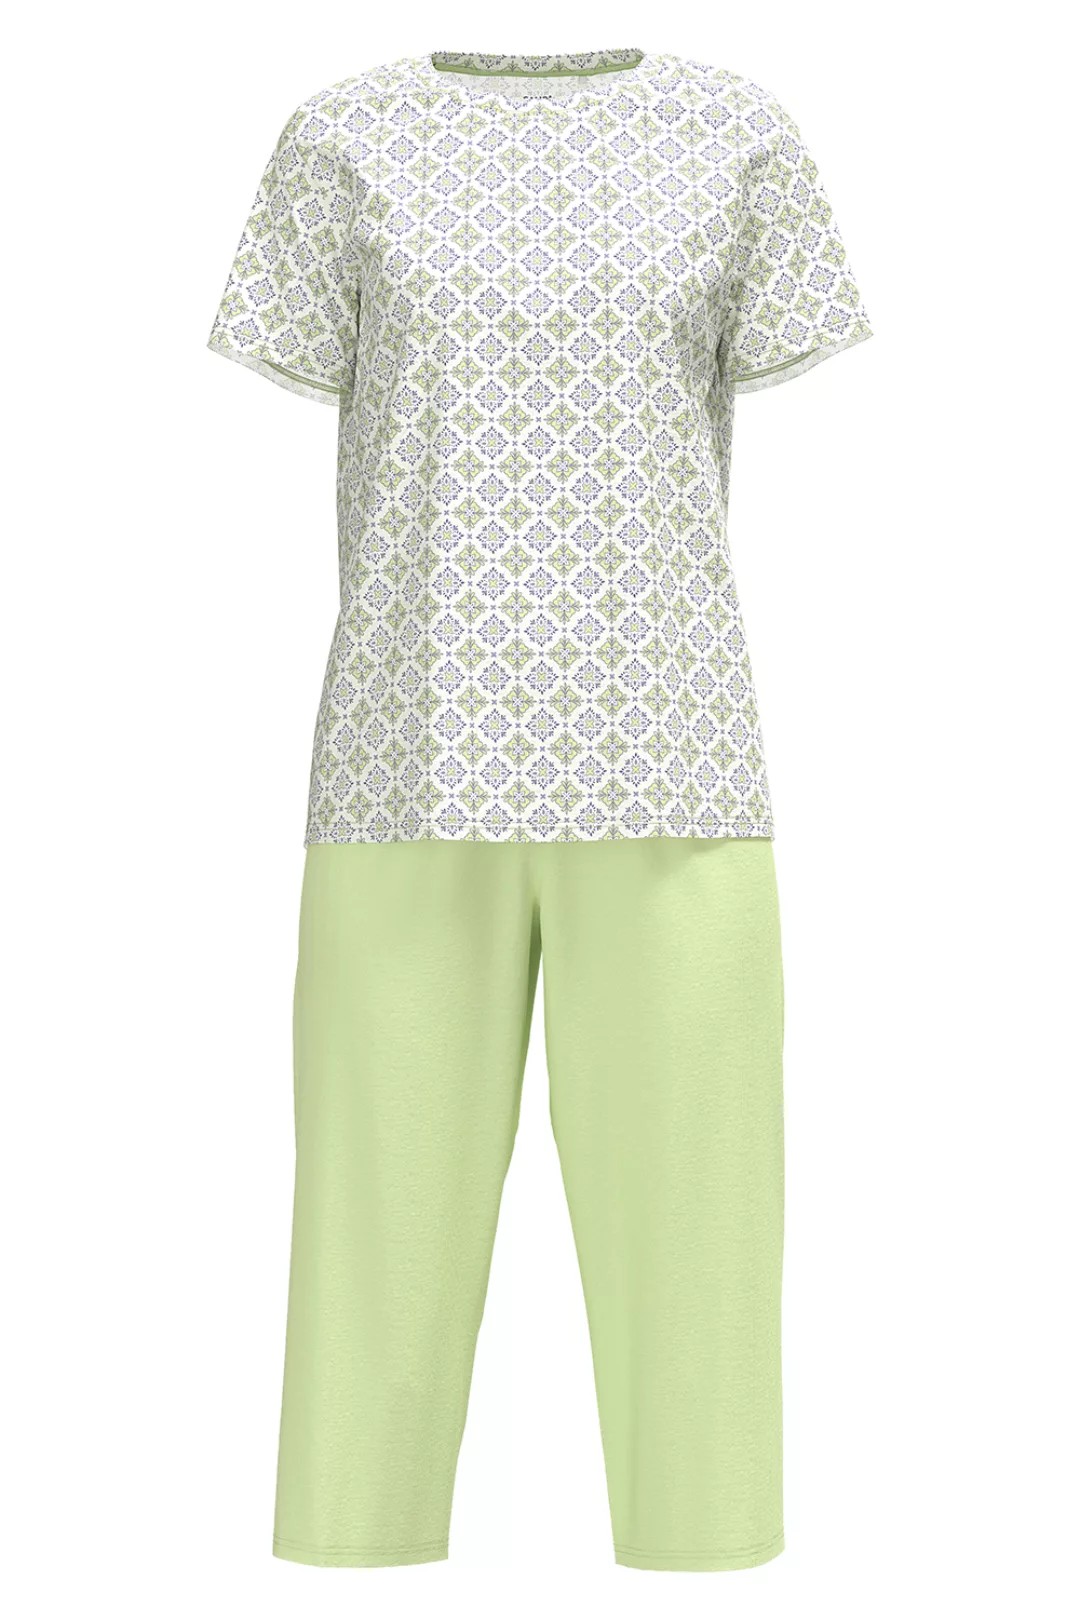 Calida Pyjama 3/4 Spring Nights 44 grün günstig online kaufen